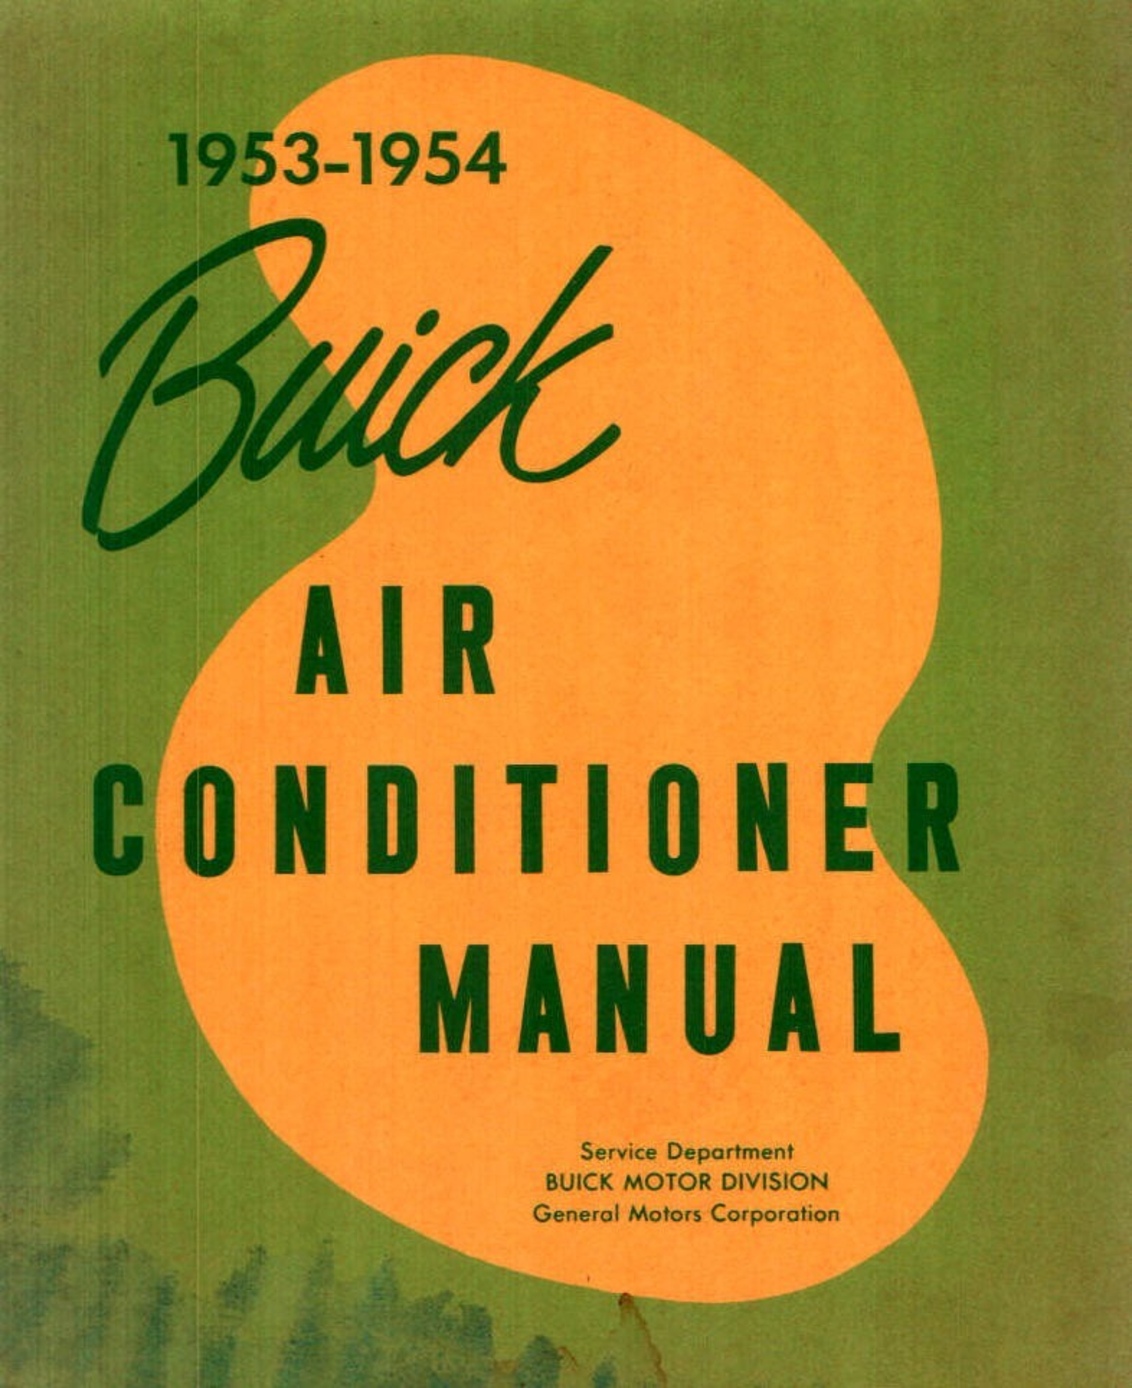 n_16 1954 Buick Shop Manual - Air Conditioner-001-001.jpg